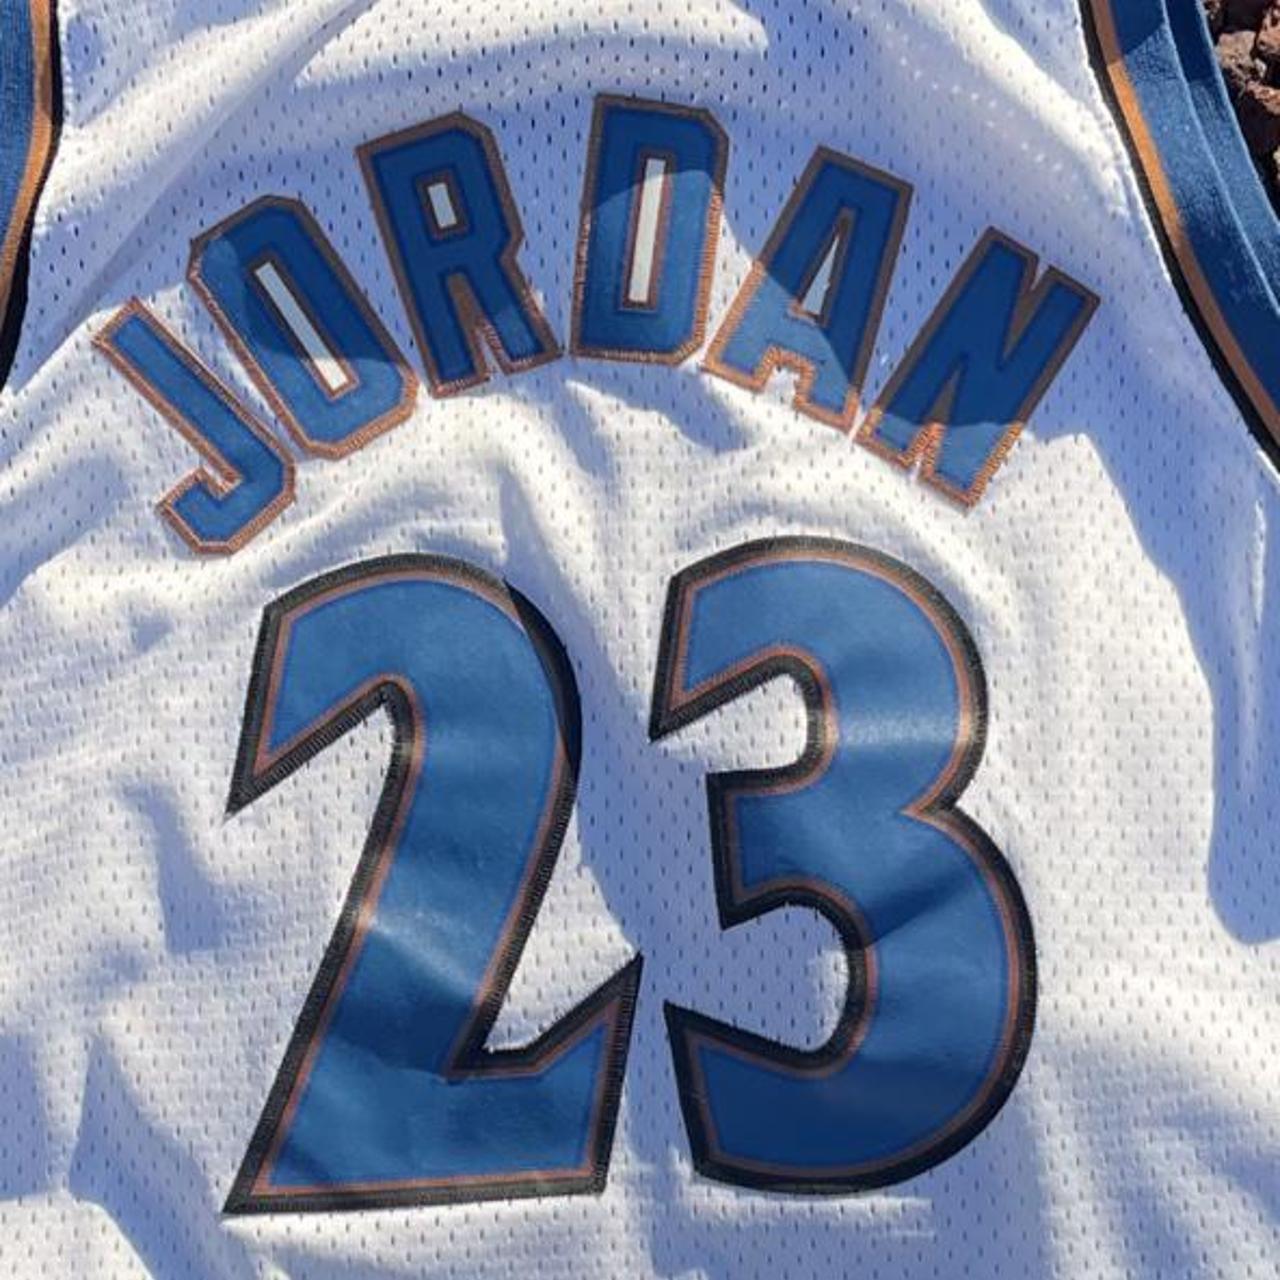 Nike Michael Jordan Washington Wizards Jersey Size - Depop